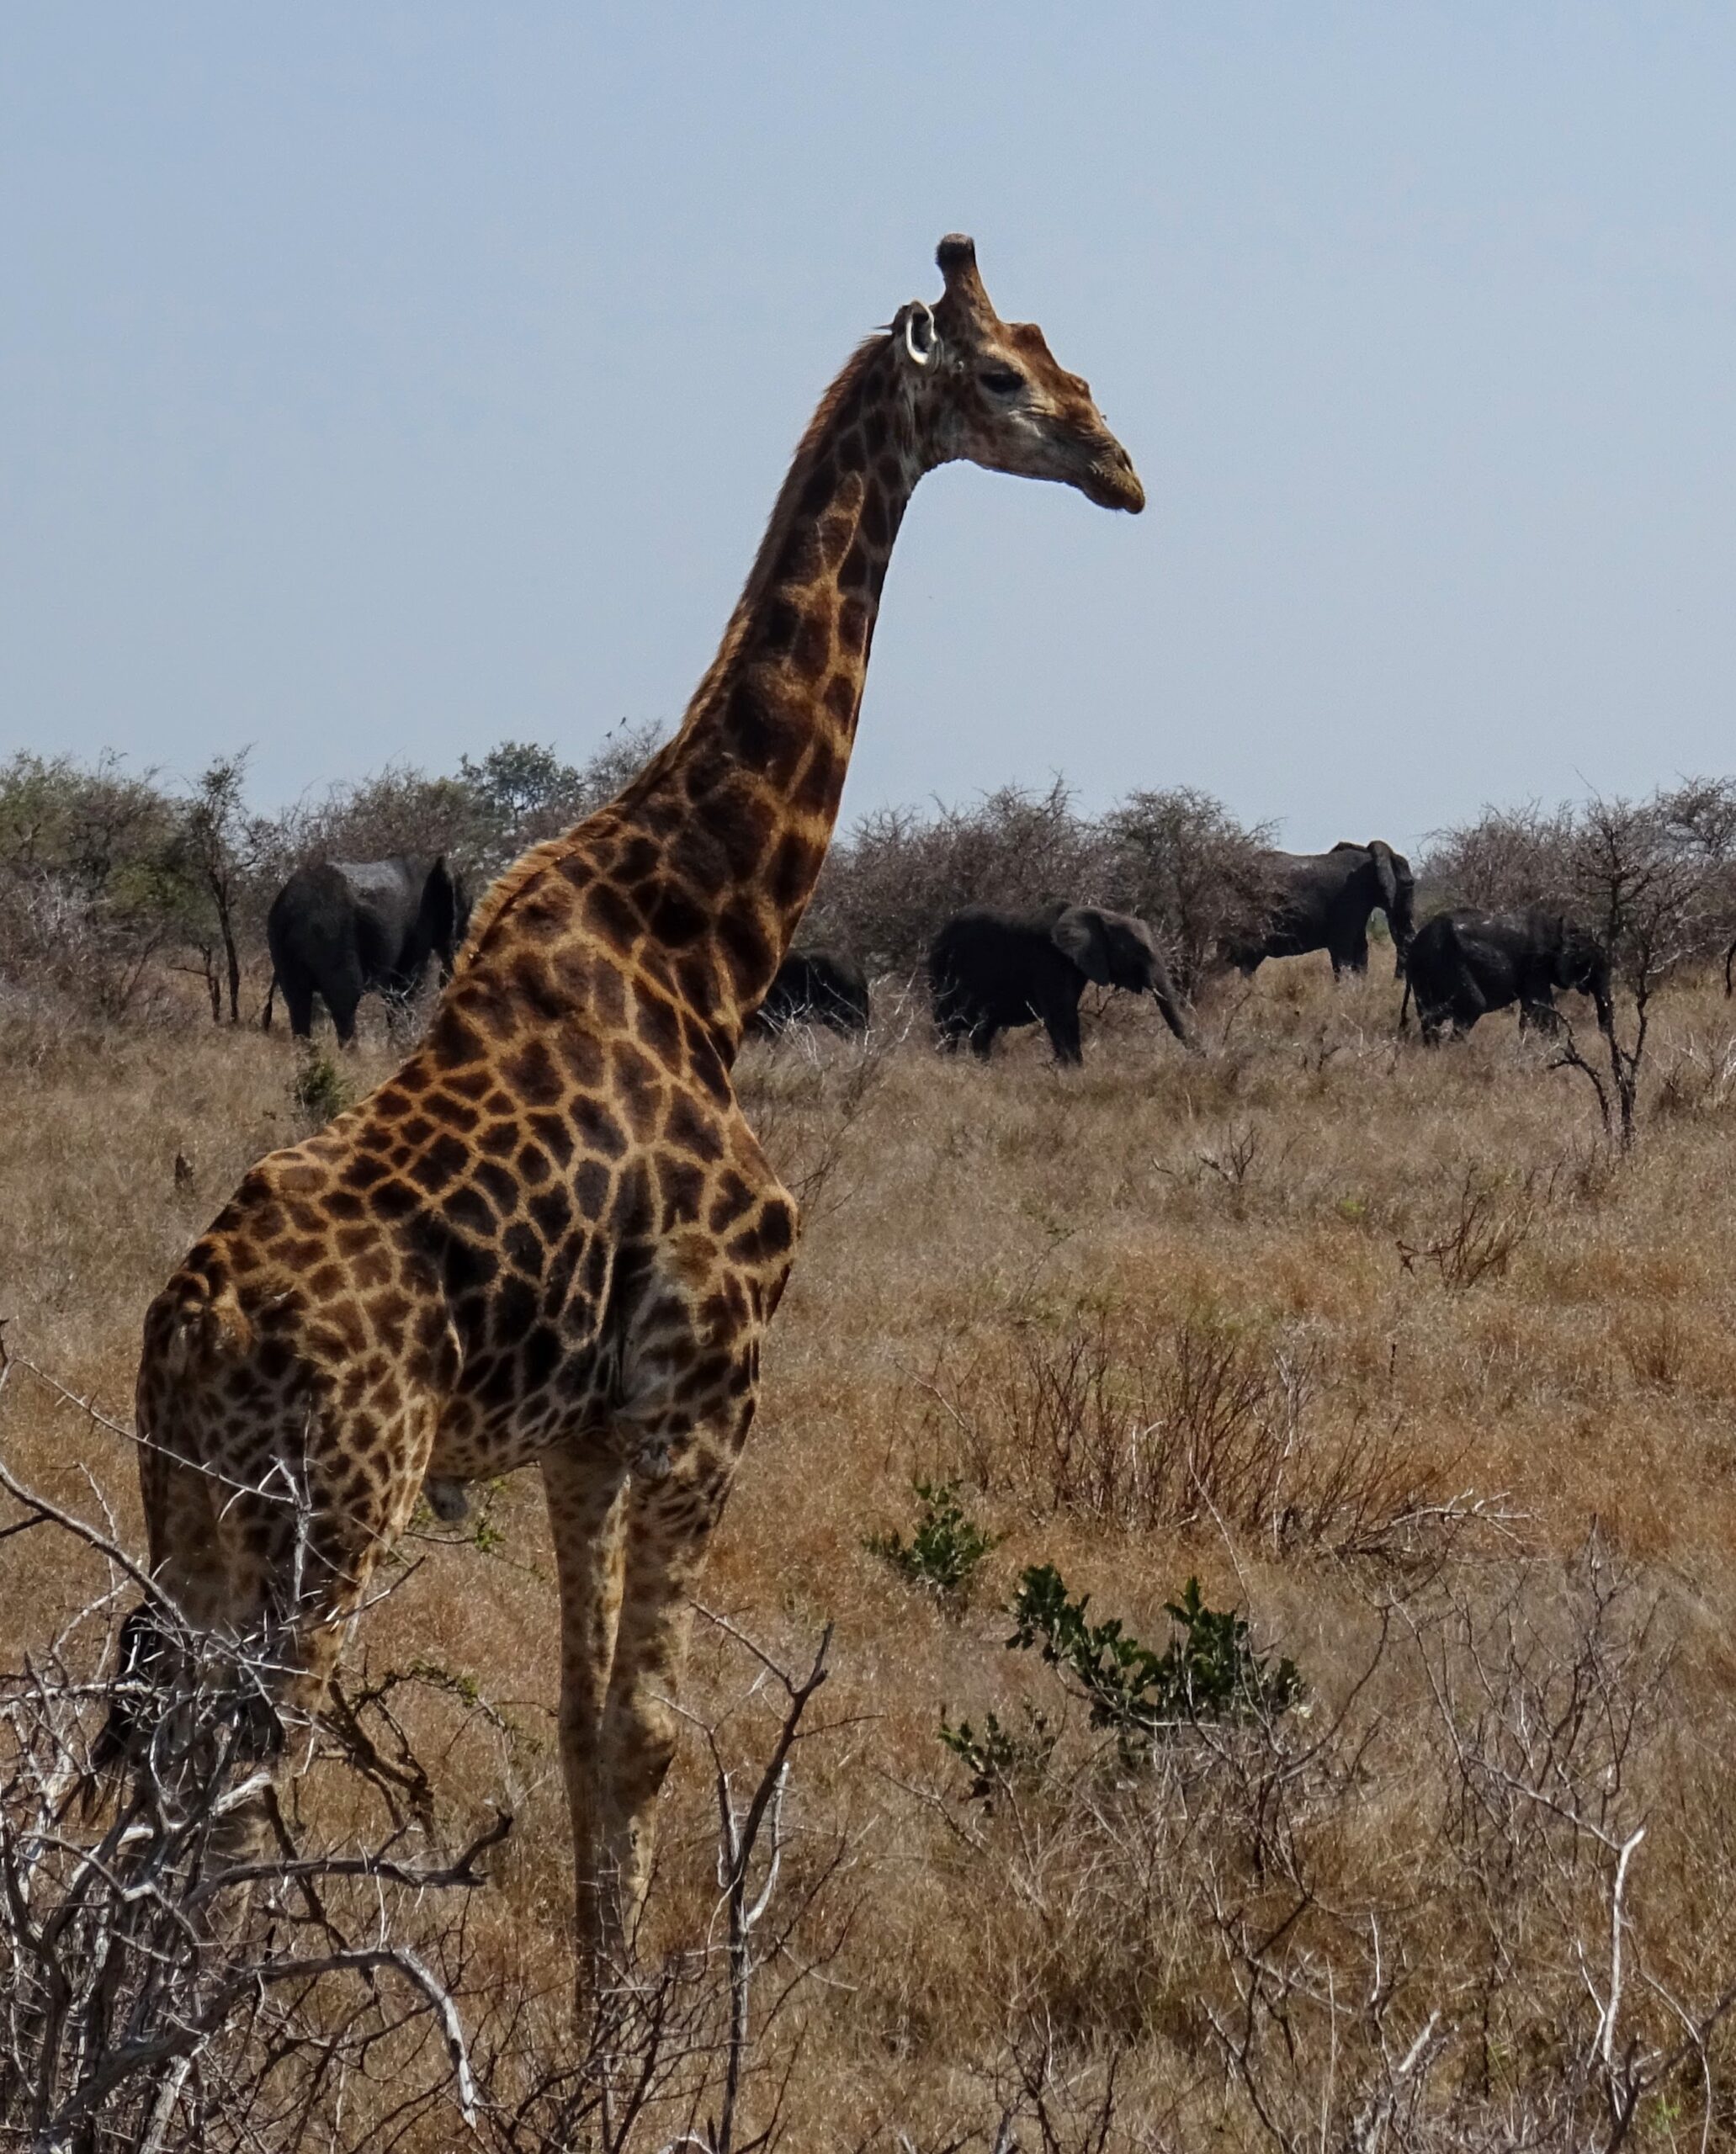 Safari & sites through southern Africa